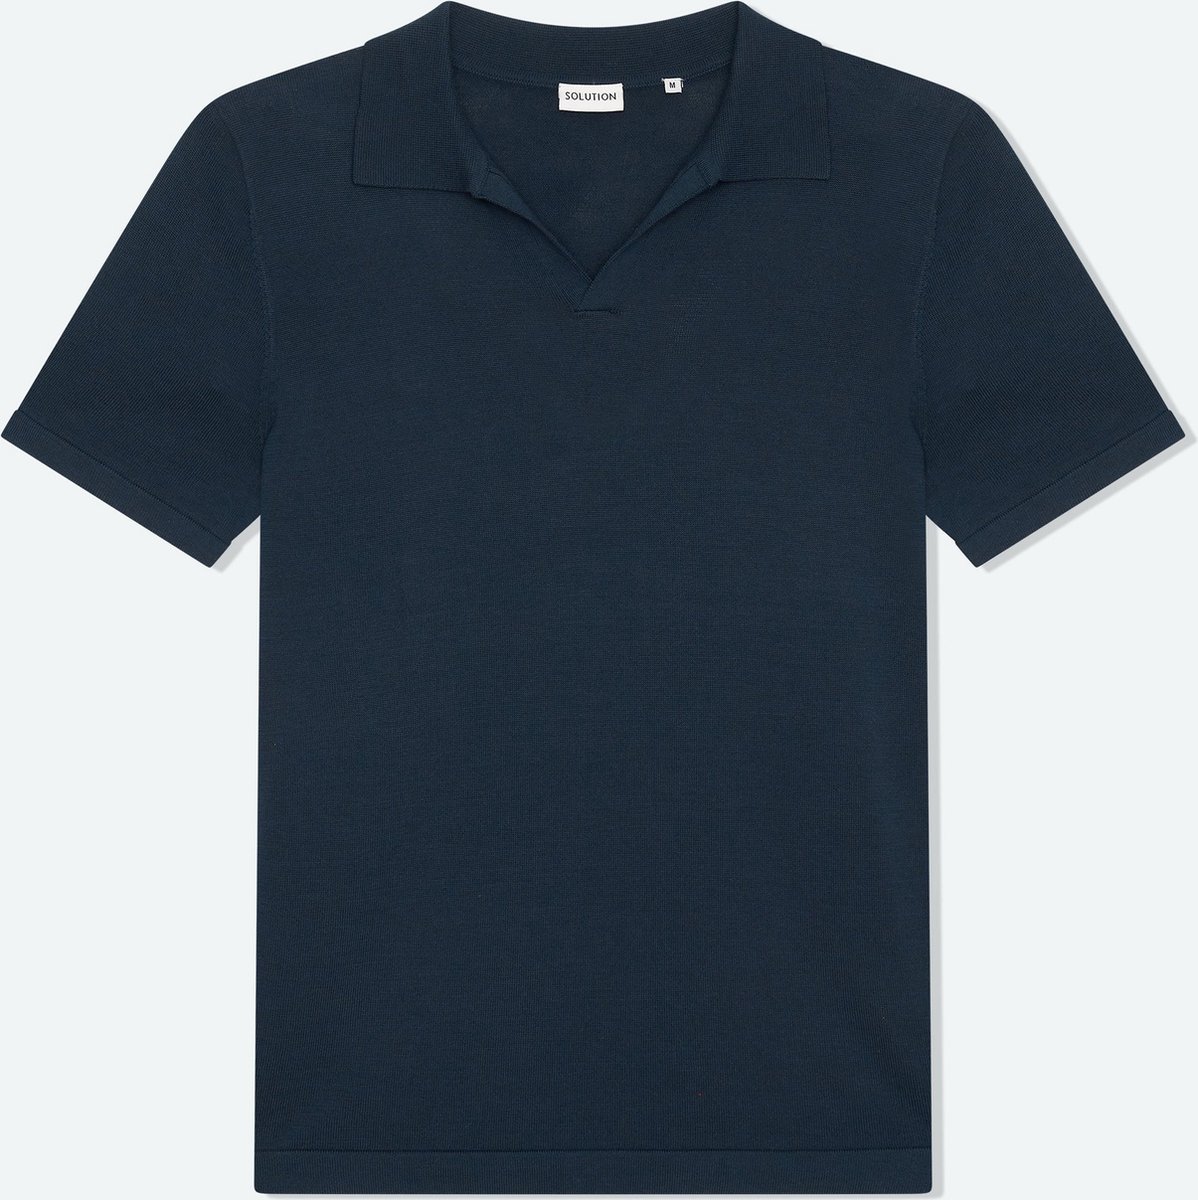 Solution Clothing Victor - Casual Poloshirt - Regular Fit - Knoopsluiting - Volwassenen - Heren - Mannen - Navy - XL - XL - Solution Clothing